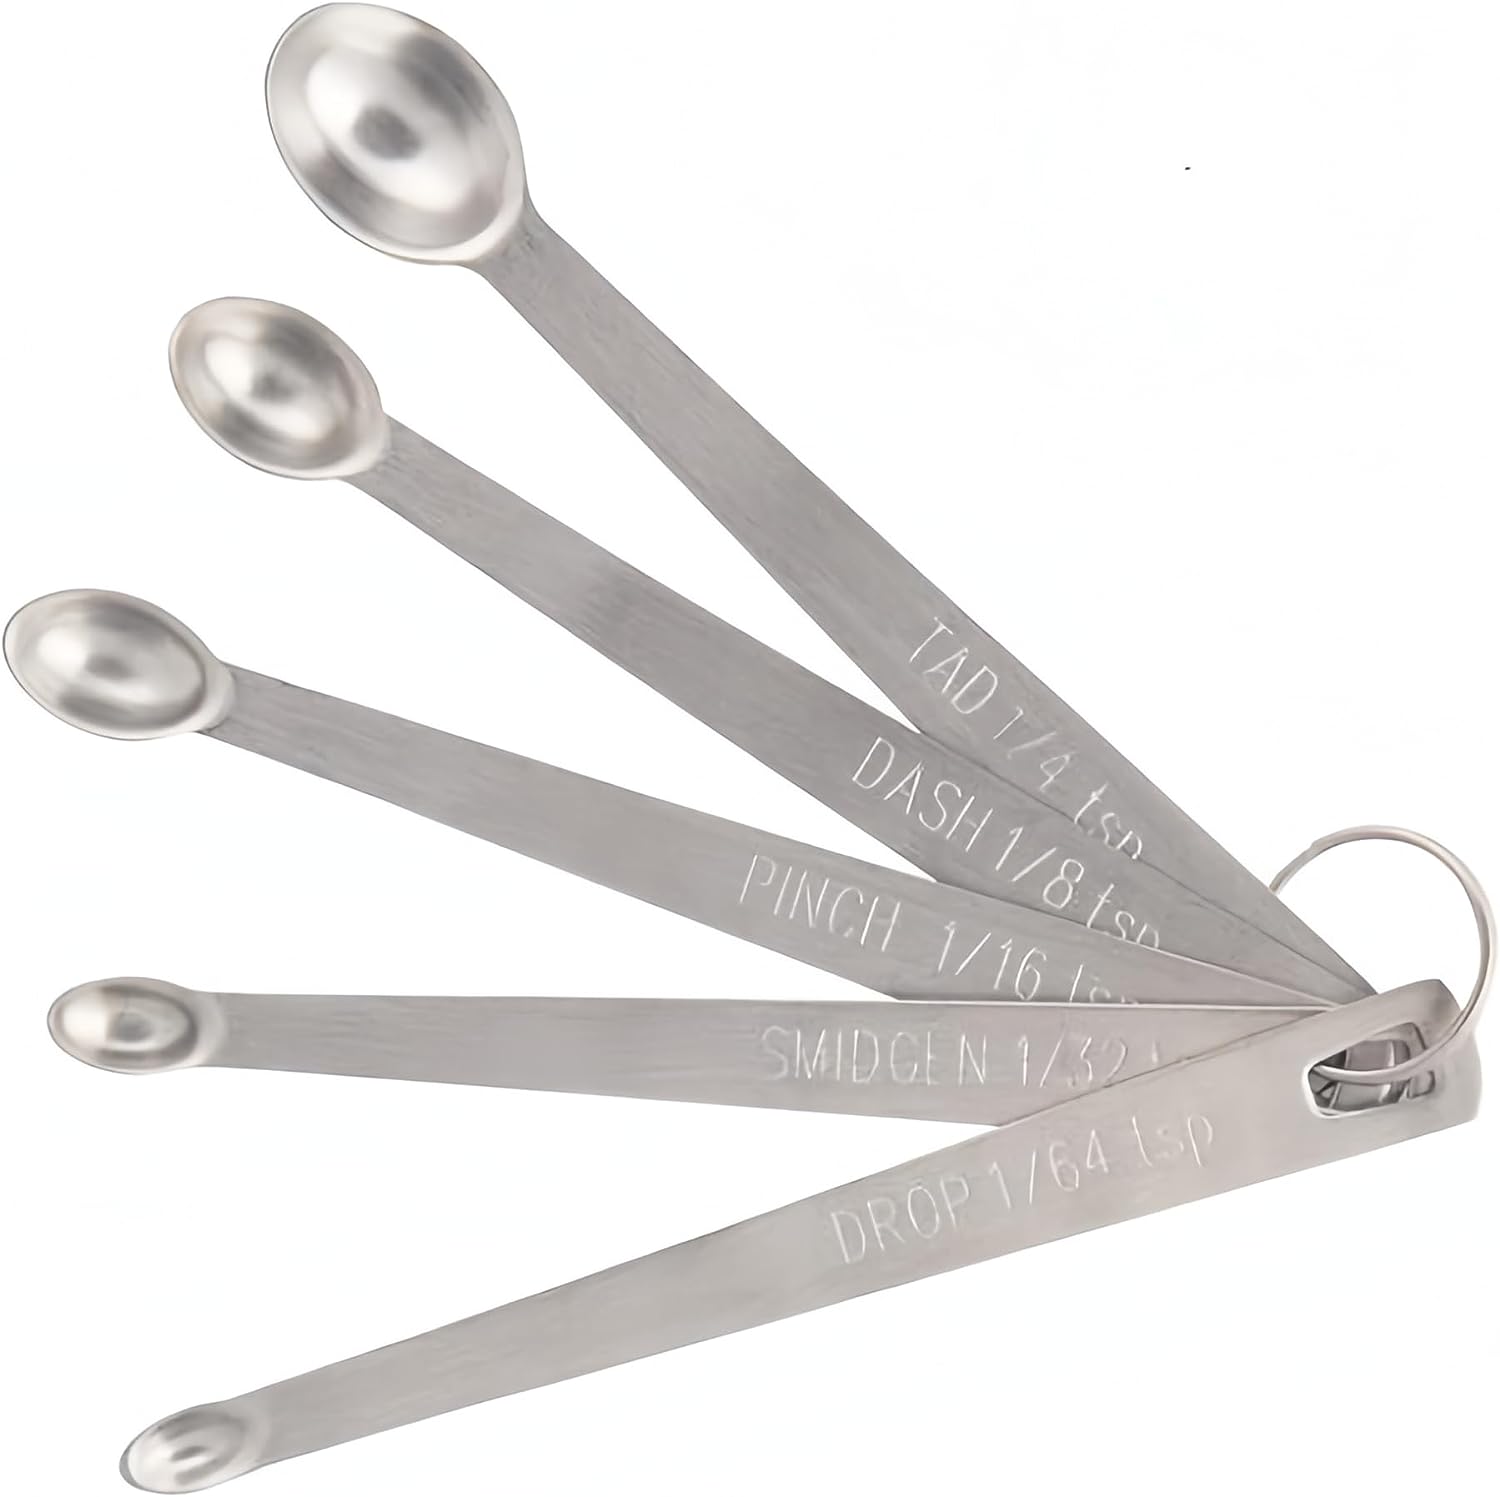 Zsirue 2 PCS Adjustable Measuring Spoon Set, Measuring Dry/Liquid  Ingredients, Metering Spoon for Baking, Cooking, Powder (White)